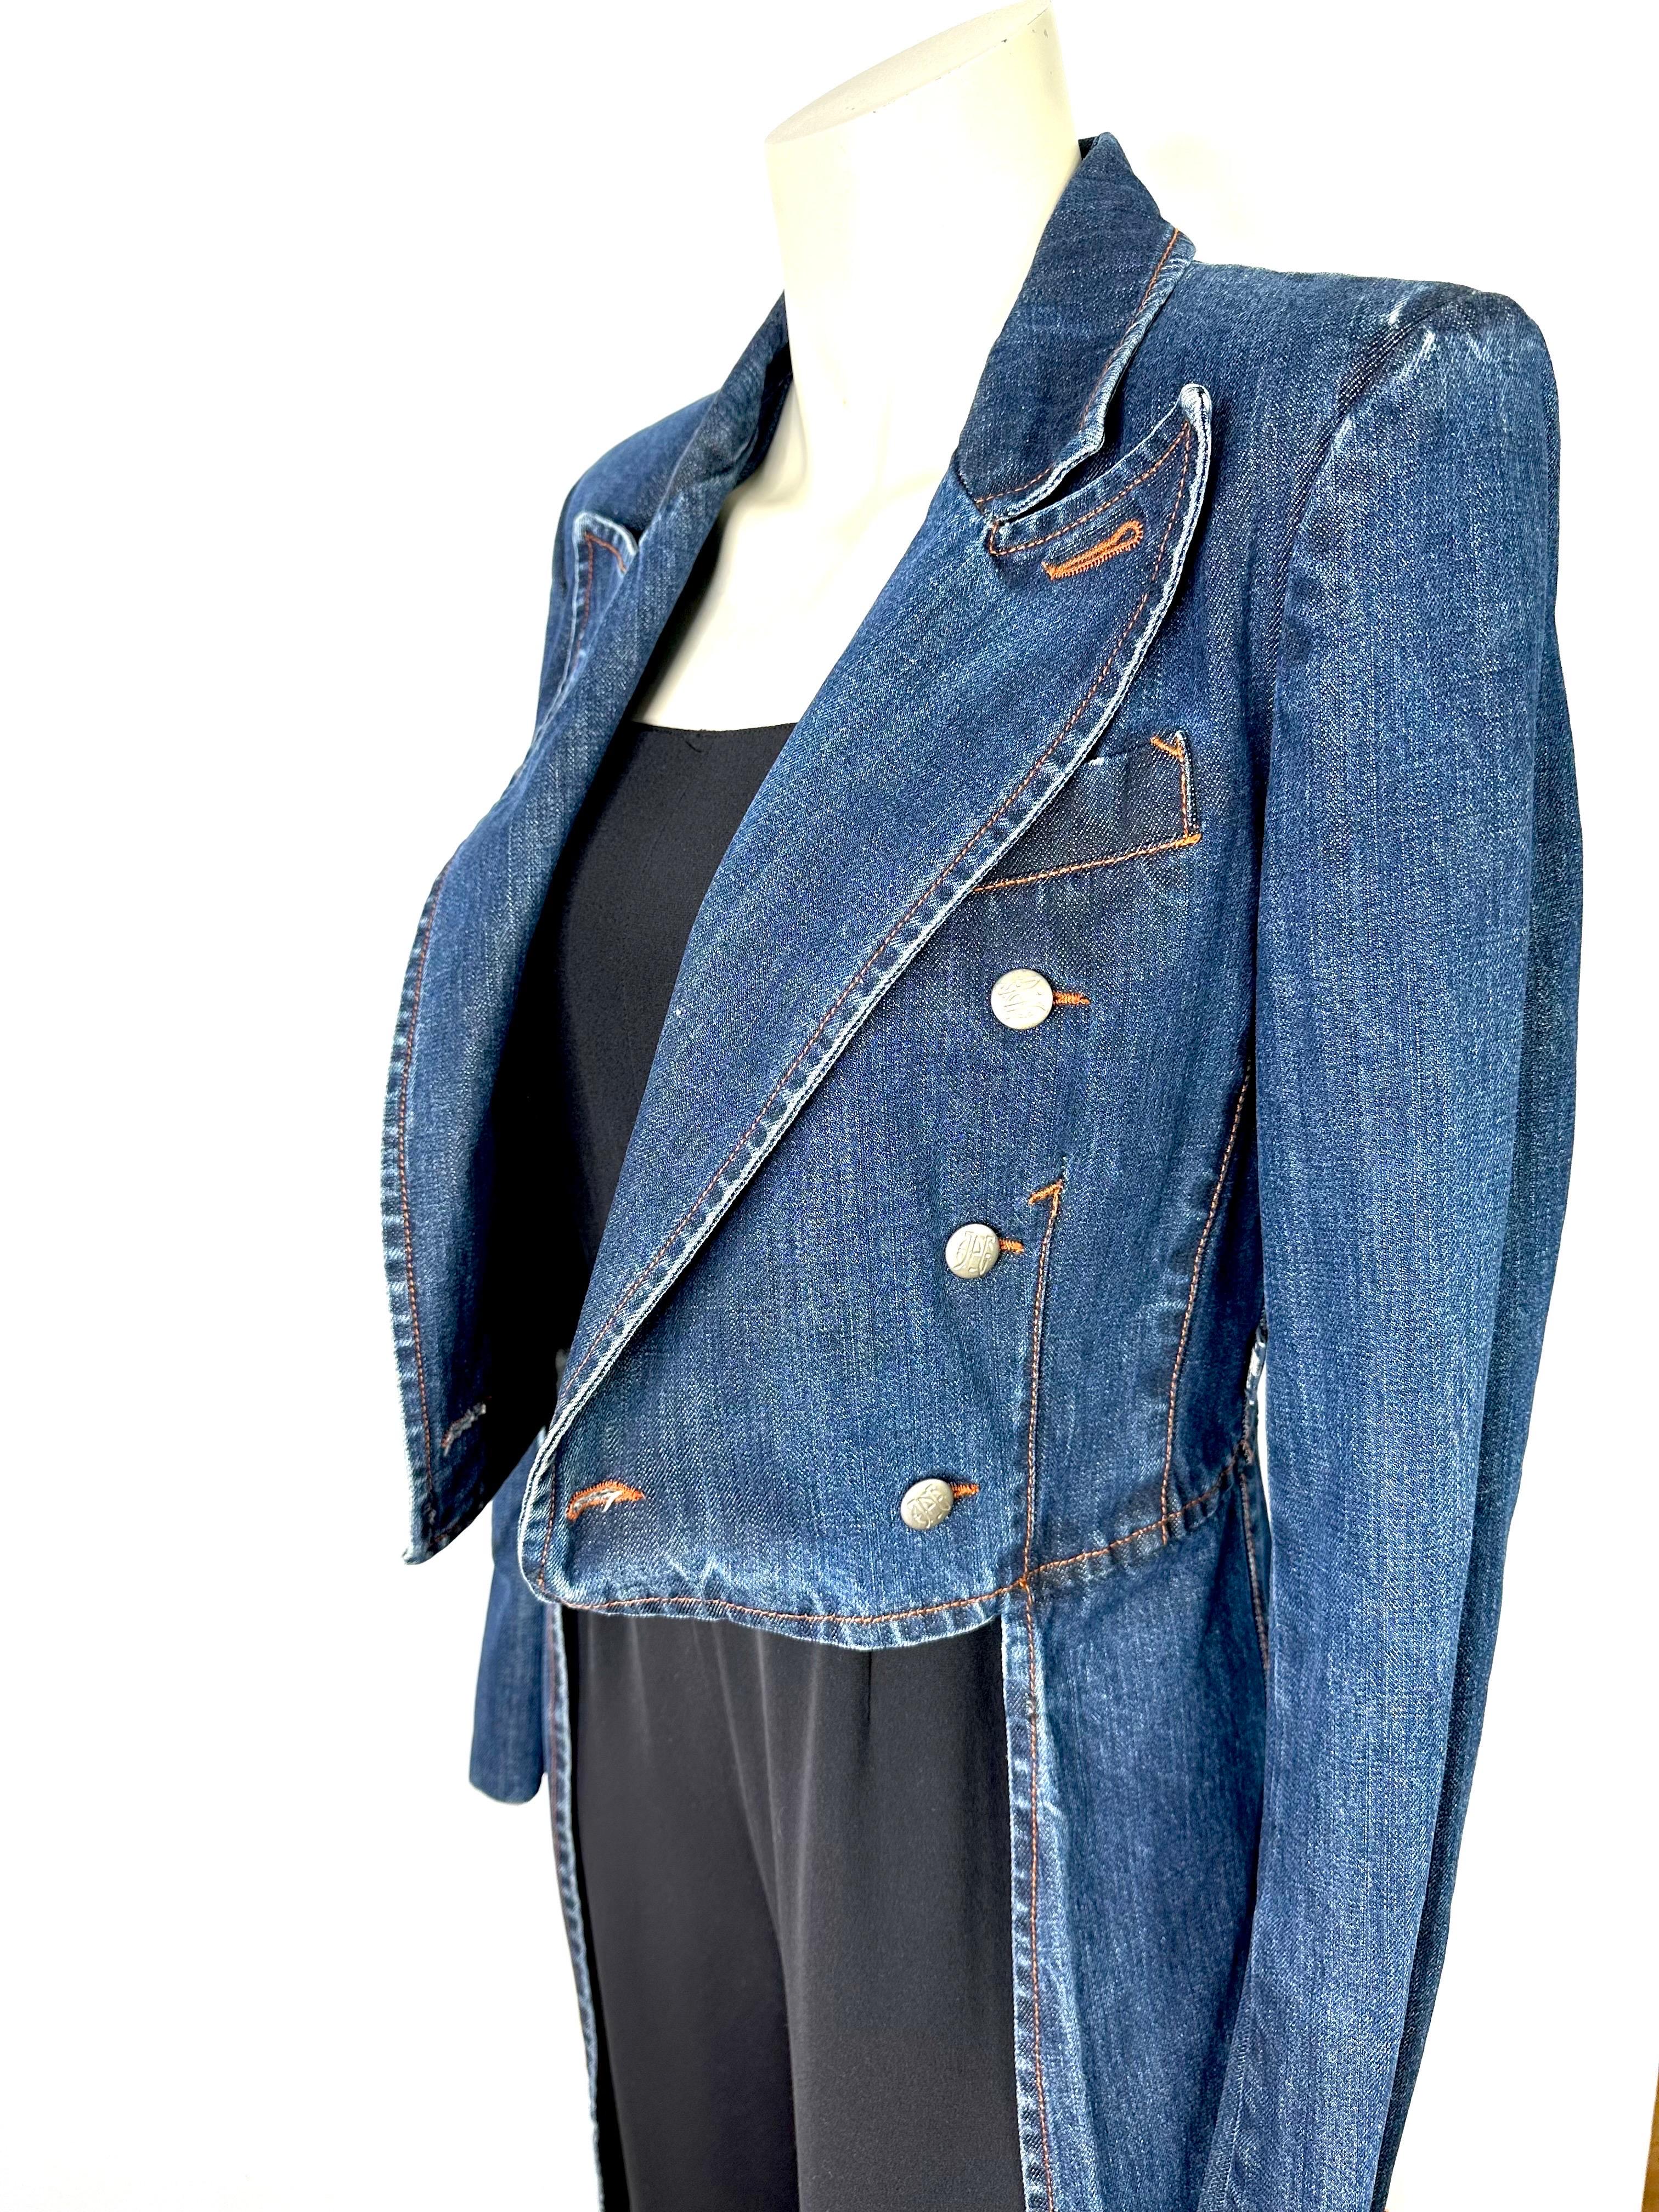 Jean Paul Gaultier vintage jeans tails jacket For Sale 1